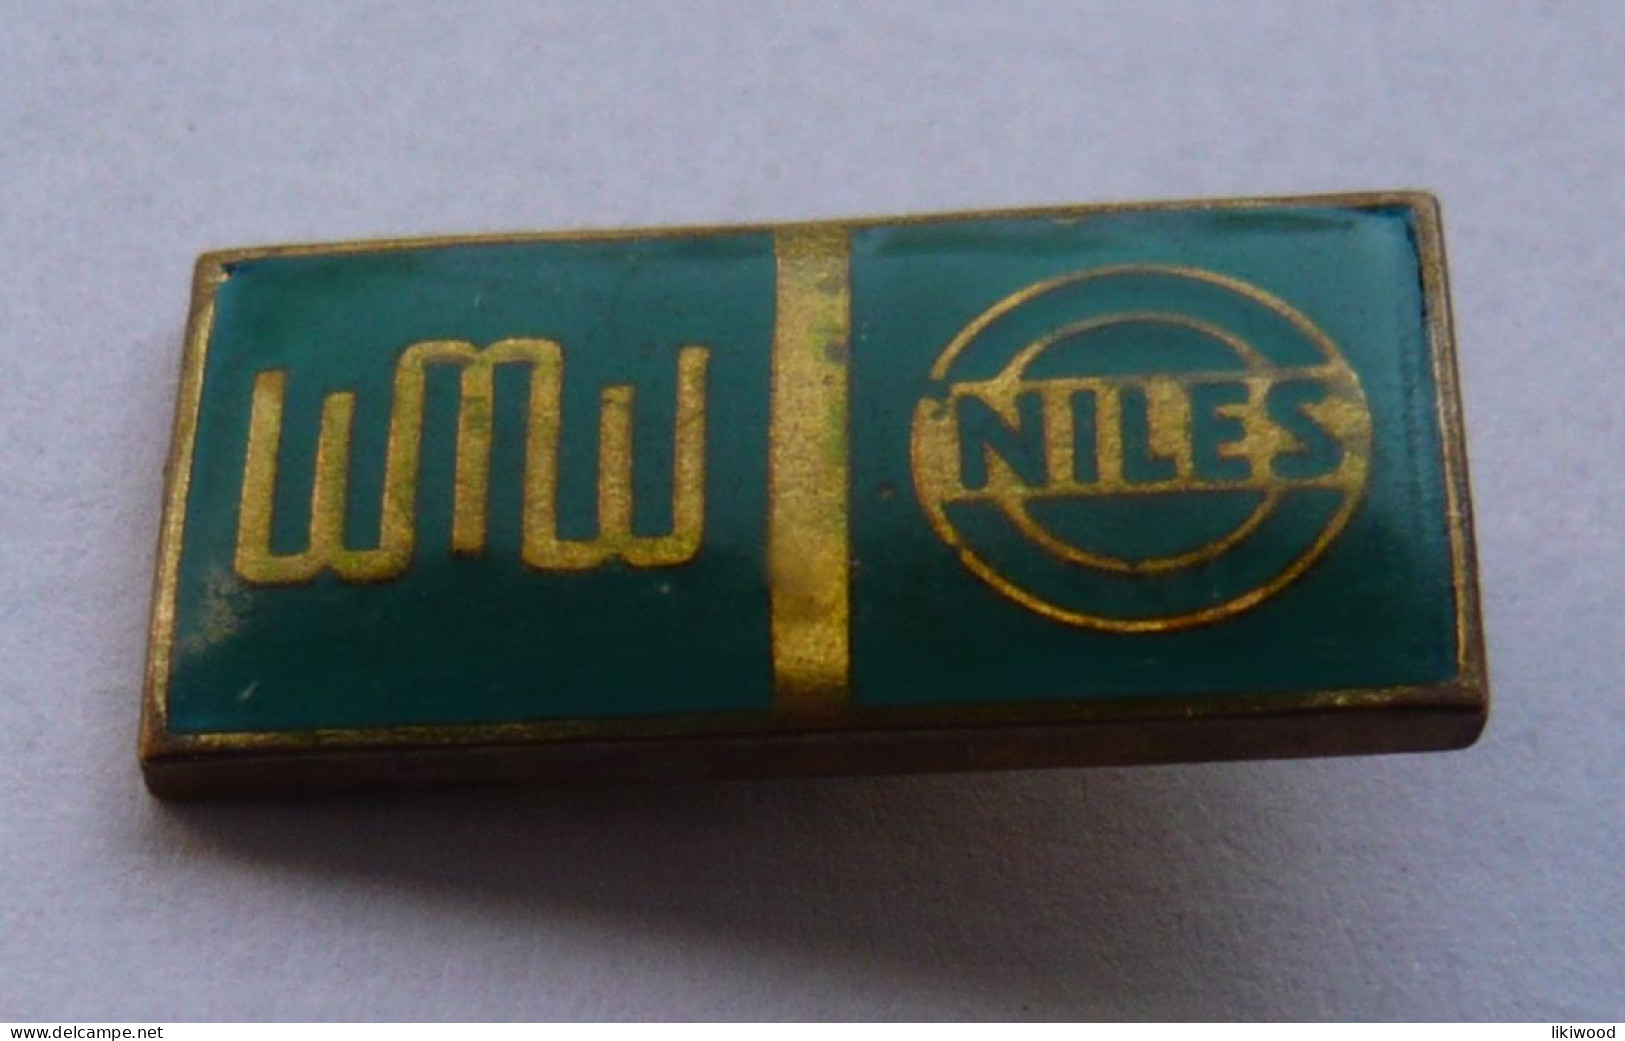 WMW Niles - Markennamen